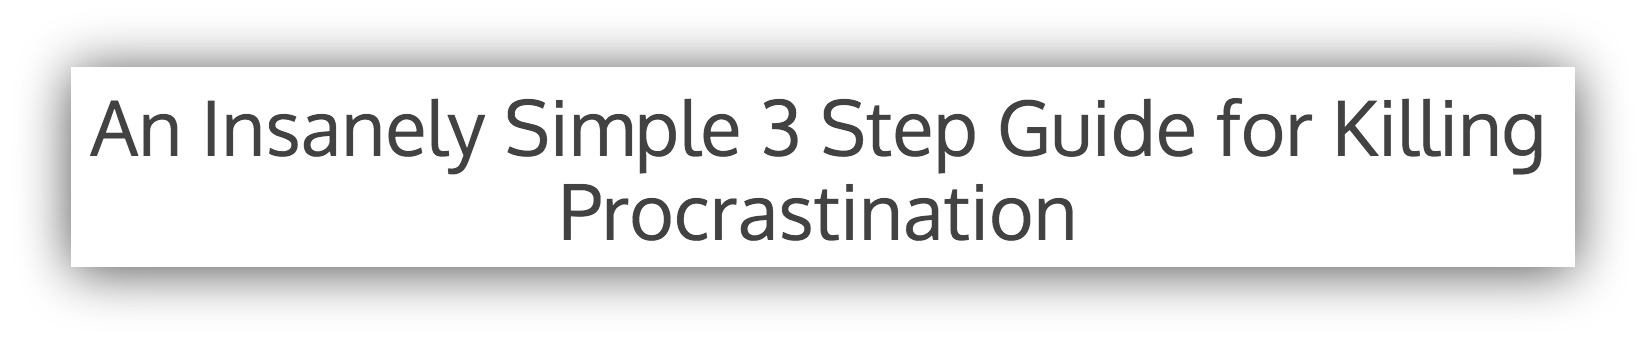 Screenshot of an headline for a 3 step guide